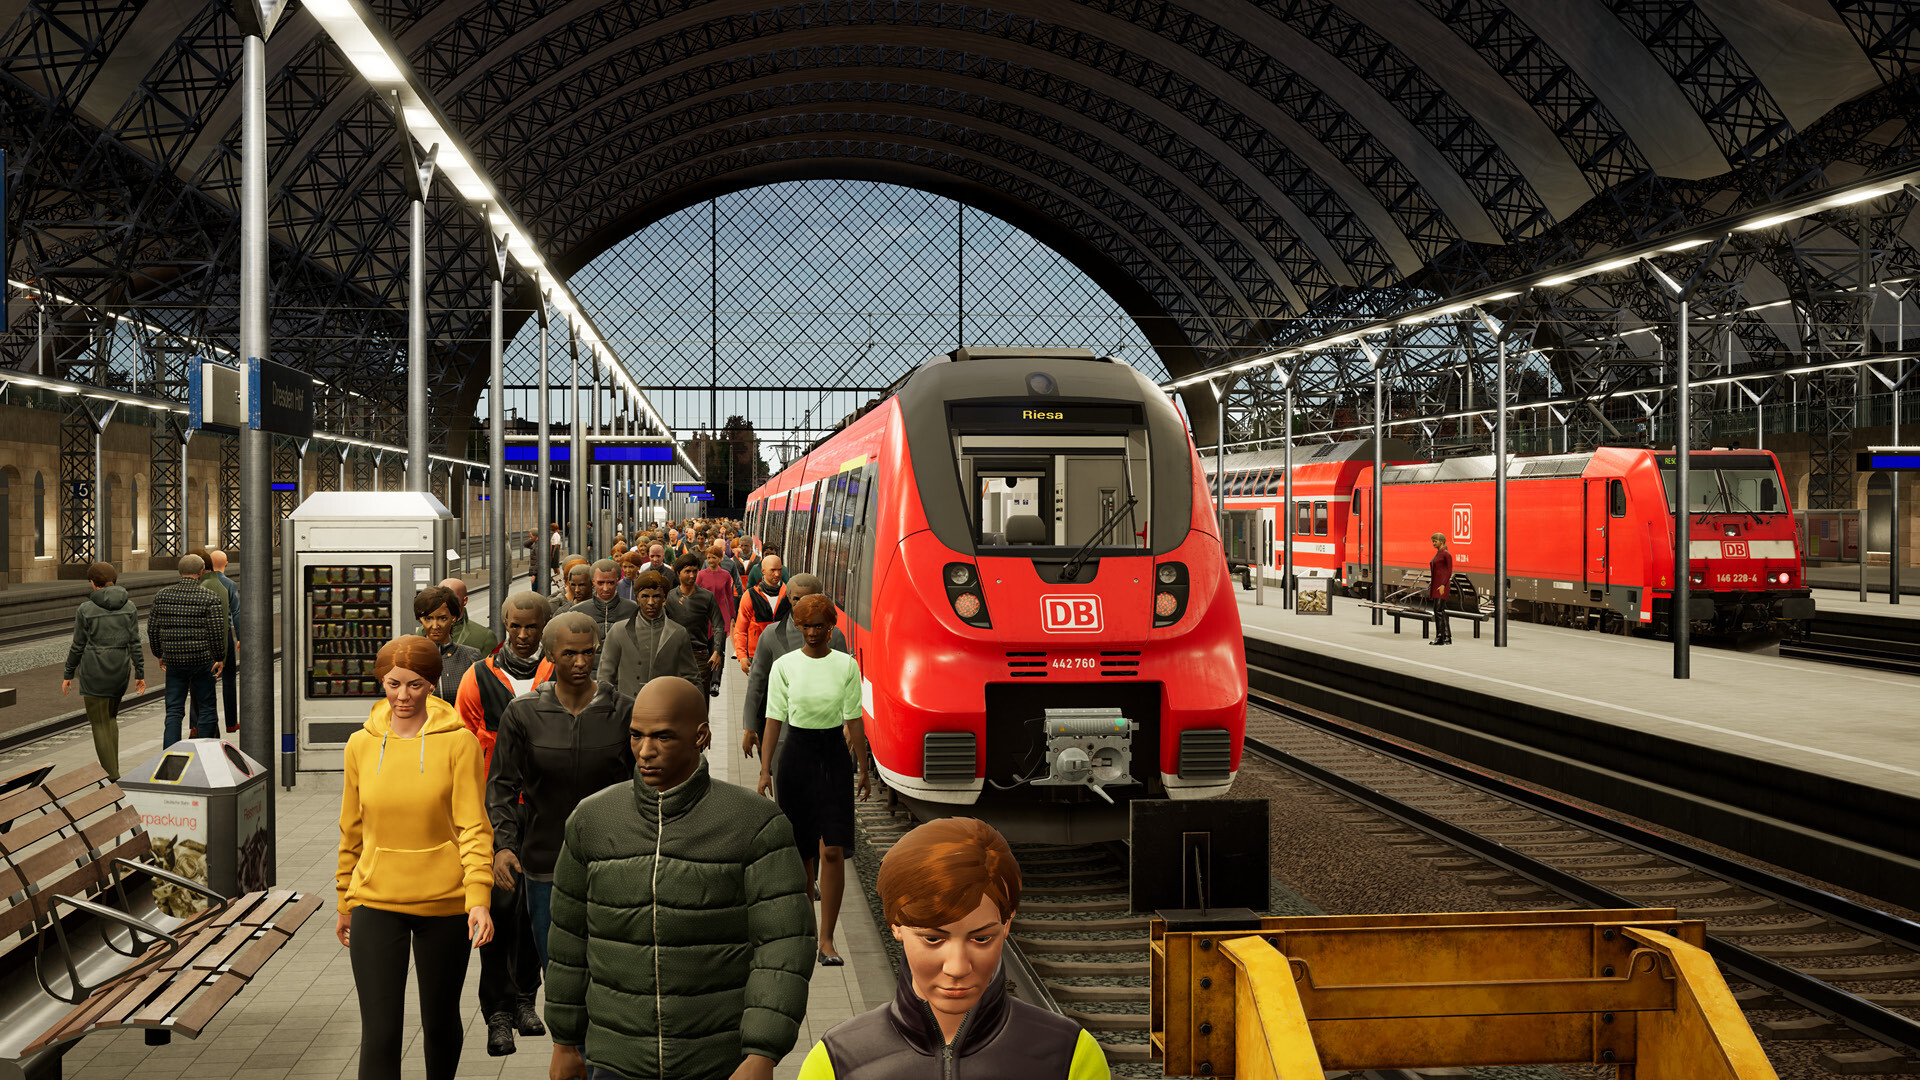 Train Sim World - Nahverkehr Dresden - Riesa Route Add-On DLC Steam CD Key 11.29$